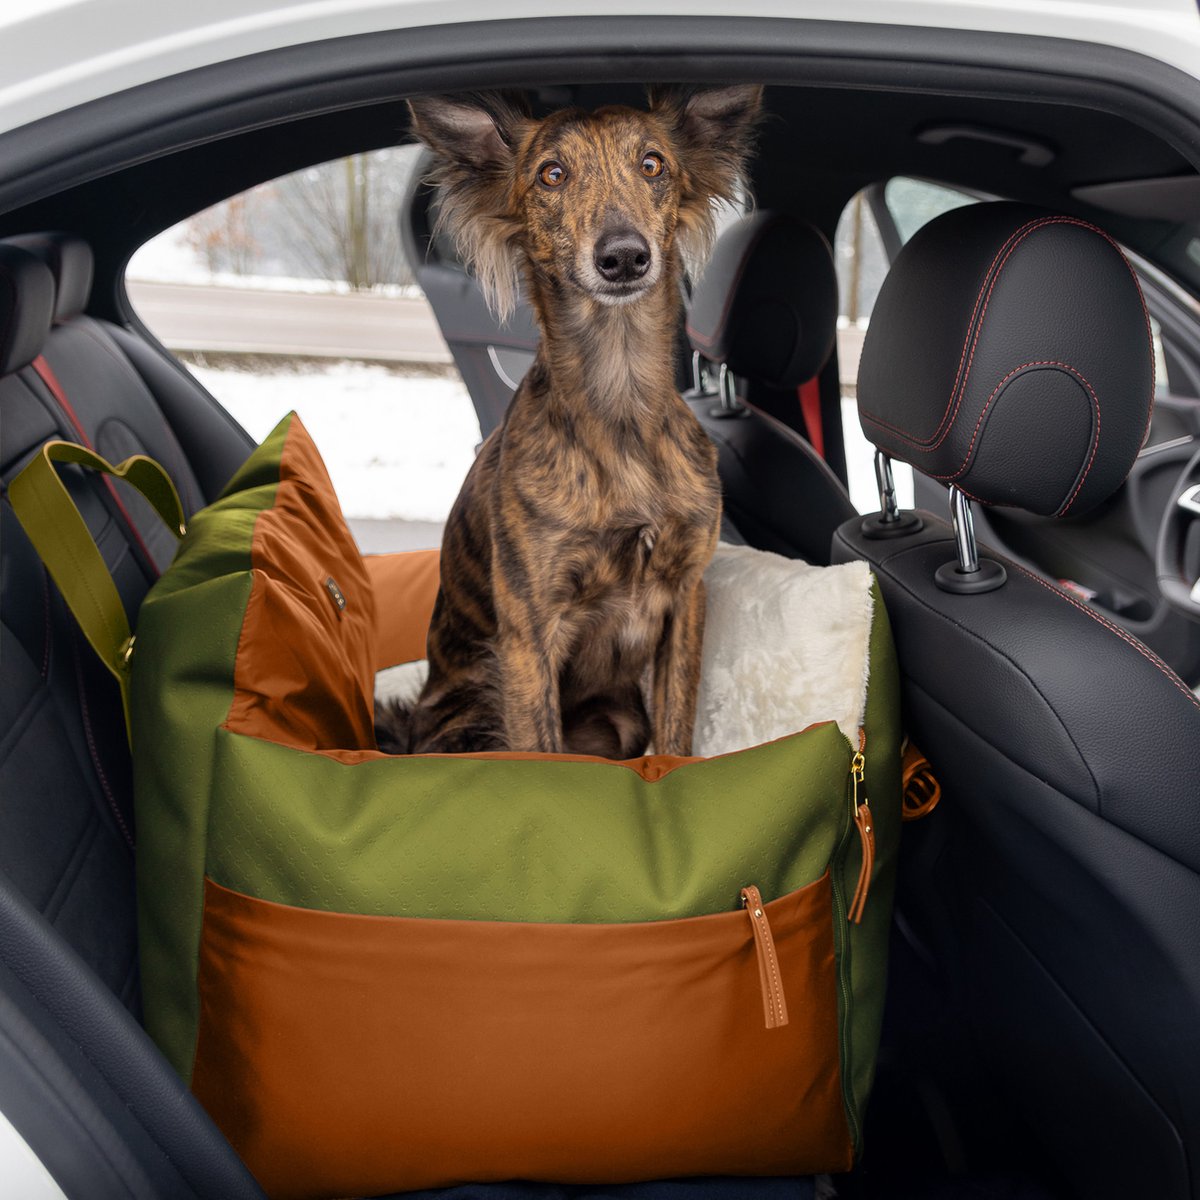 Necklet Onderzoek Ministerie L'élianne ®: Luxe Grote Honden Autostoel - XL Auto Hondenmand - Verhoogde  Autostoel Hond - Honden Reismand - Honden Automand XL - Huisdieren webshop